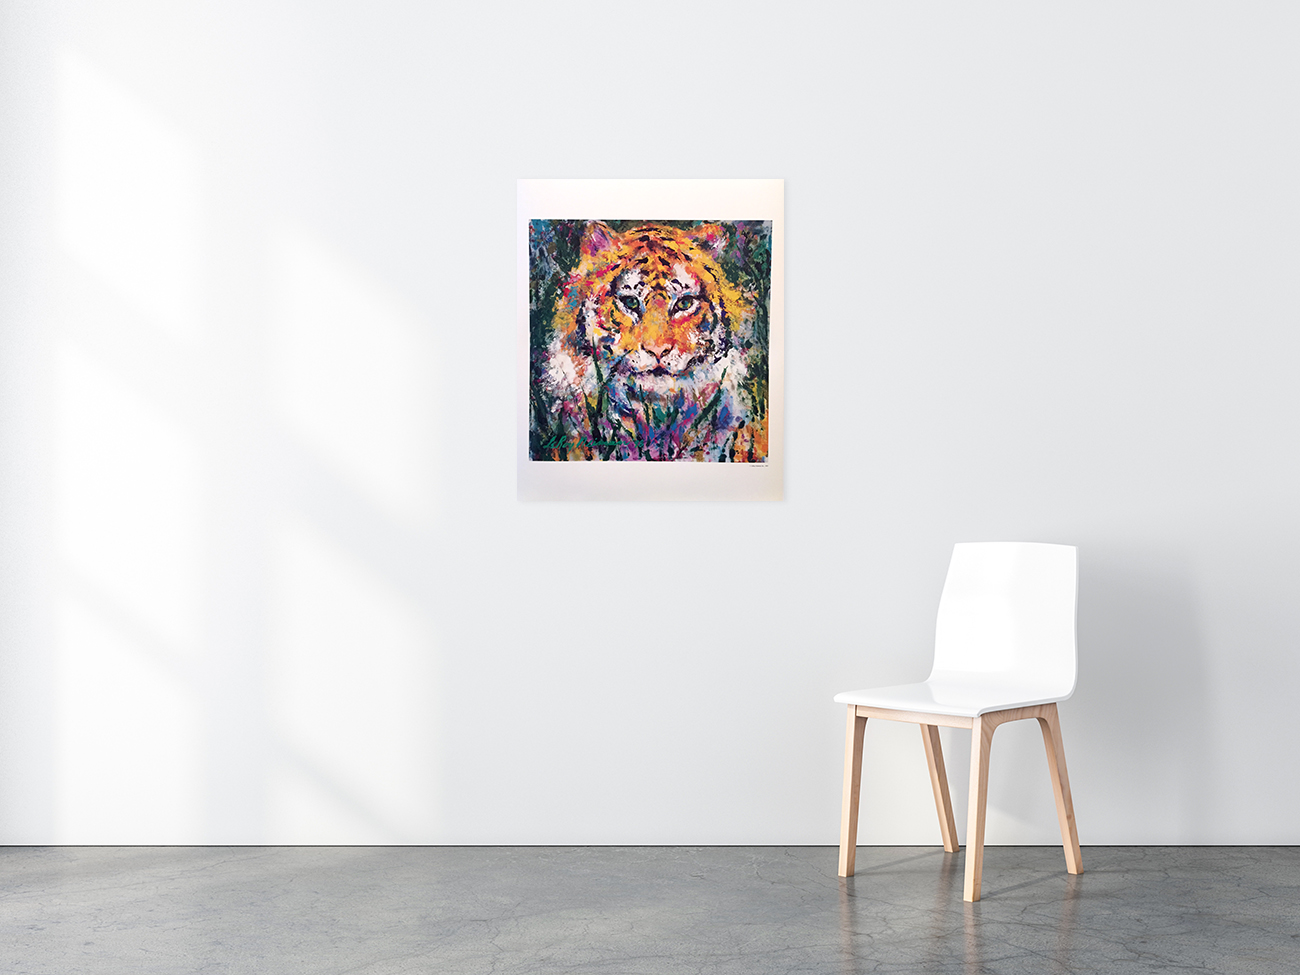 Portrait of a Tiger poster in situ